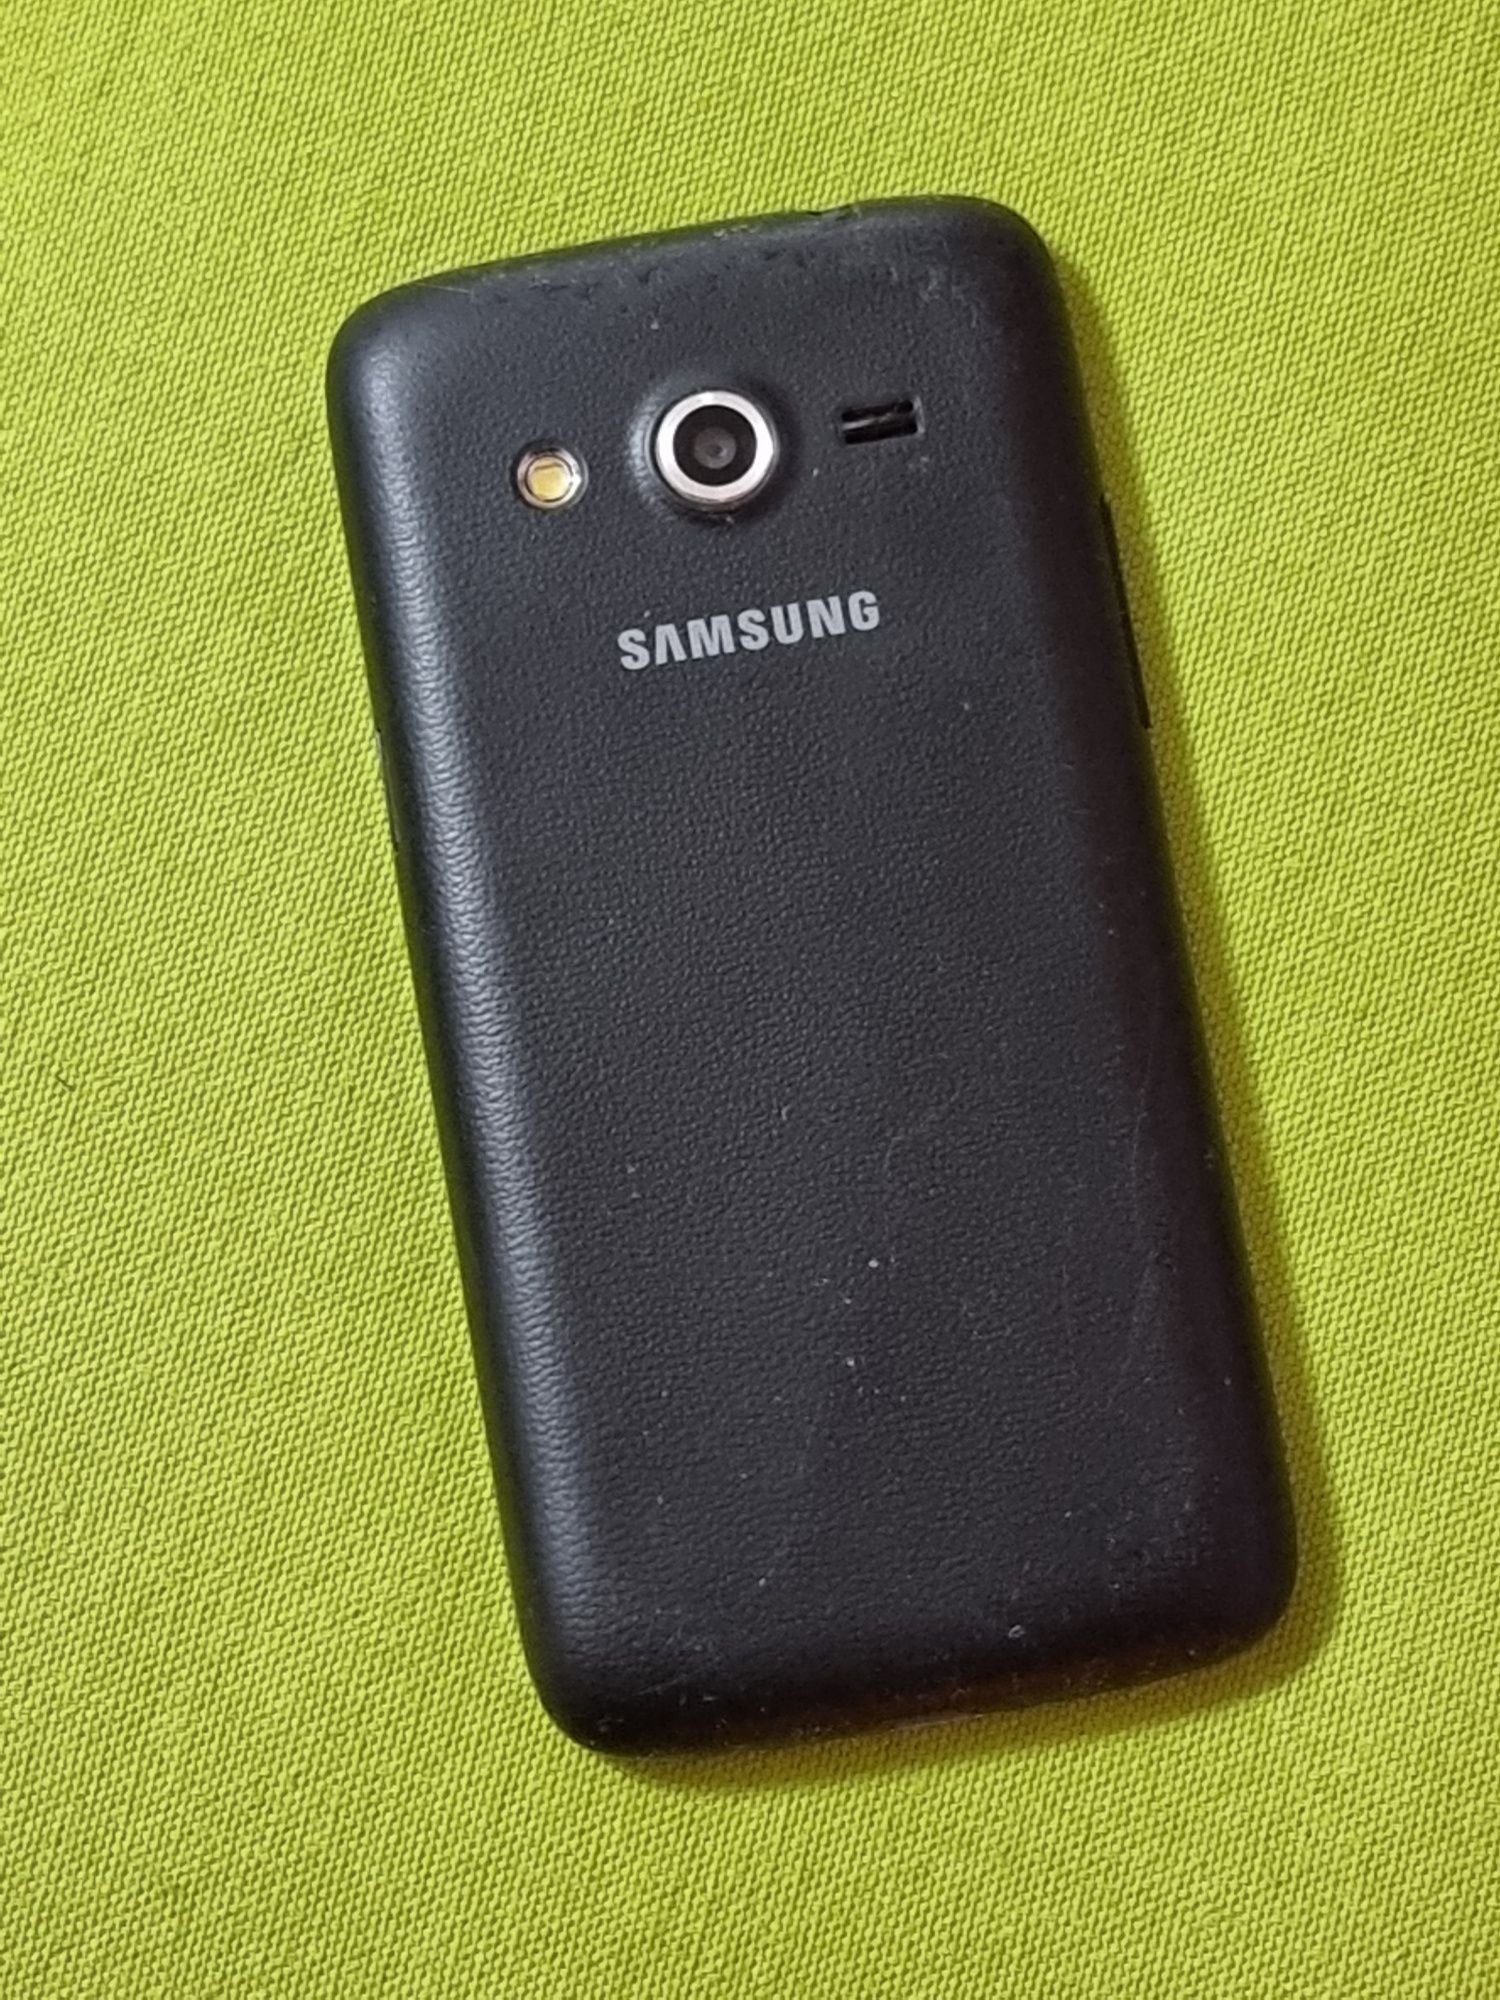 Samsung Galaxy Core, Liber de rețea. Pret fix 100 lei.